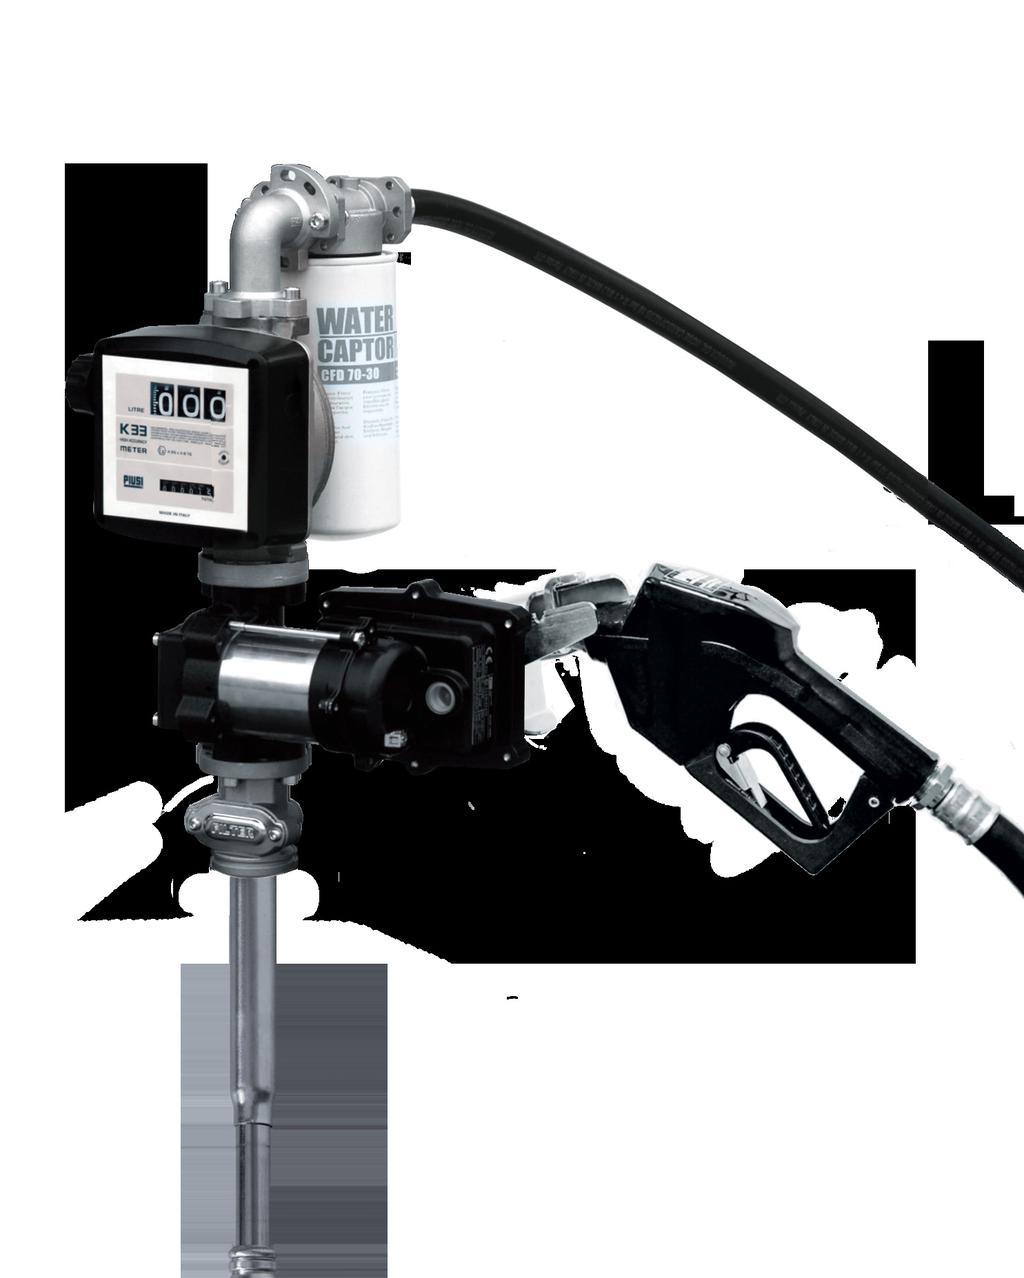 EX50 GASOLINE UL/CSA-certified transfer kit for flammable liquids: gasoline, kerosene and diesel fuel.